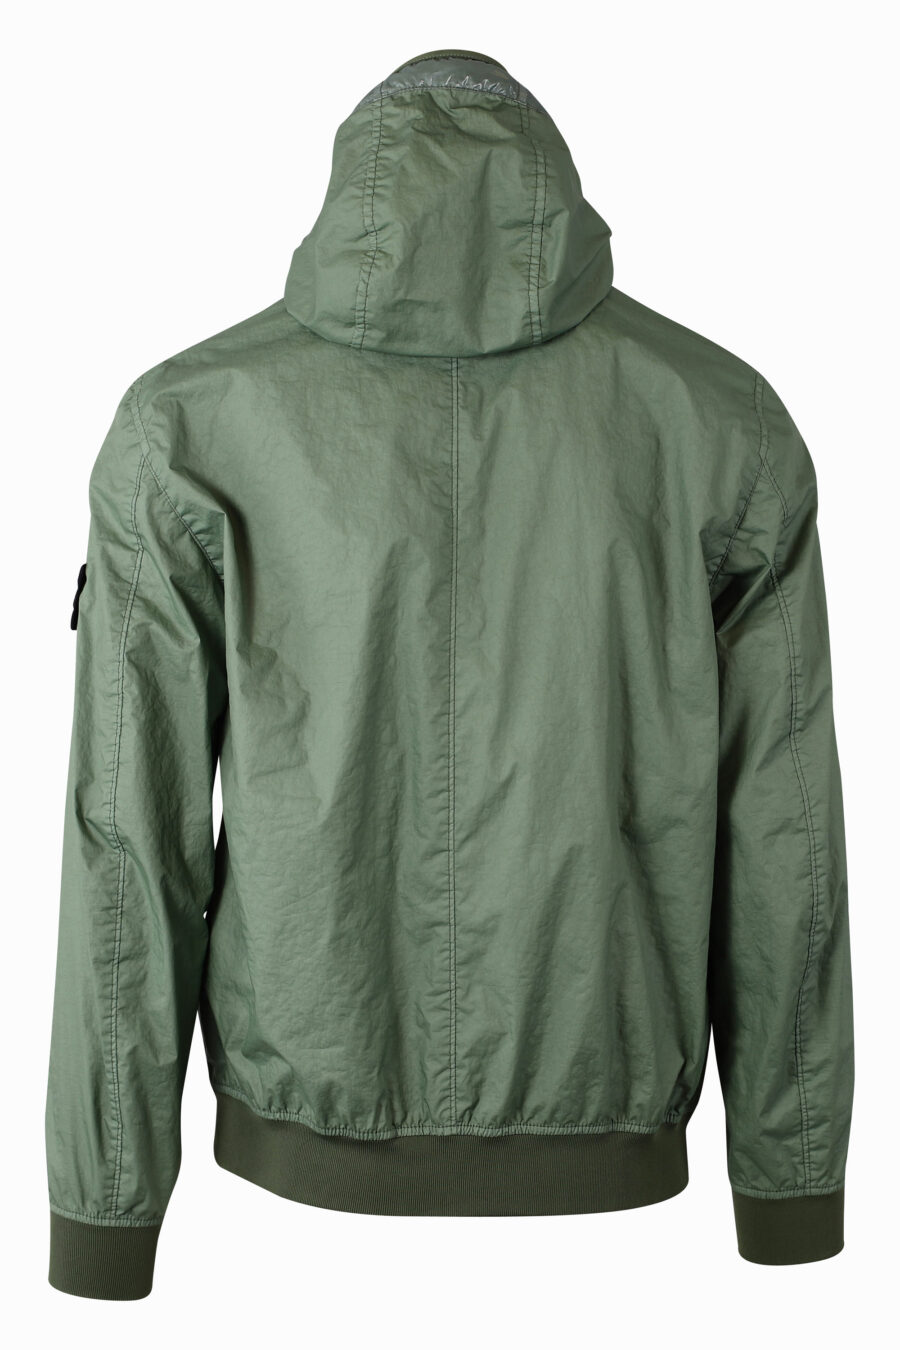 Grüne Jacke mit Kapuze und Logoaufnäher - IMG 1075